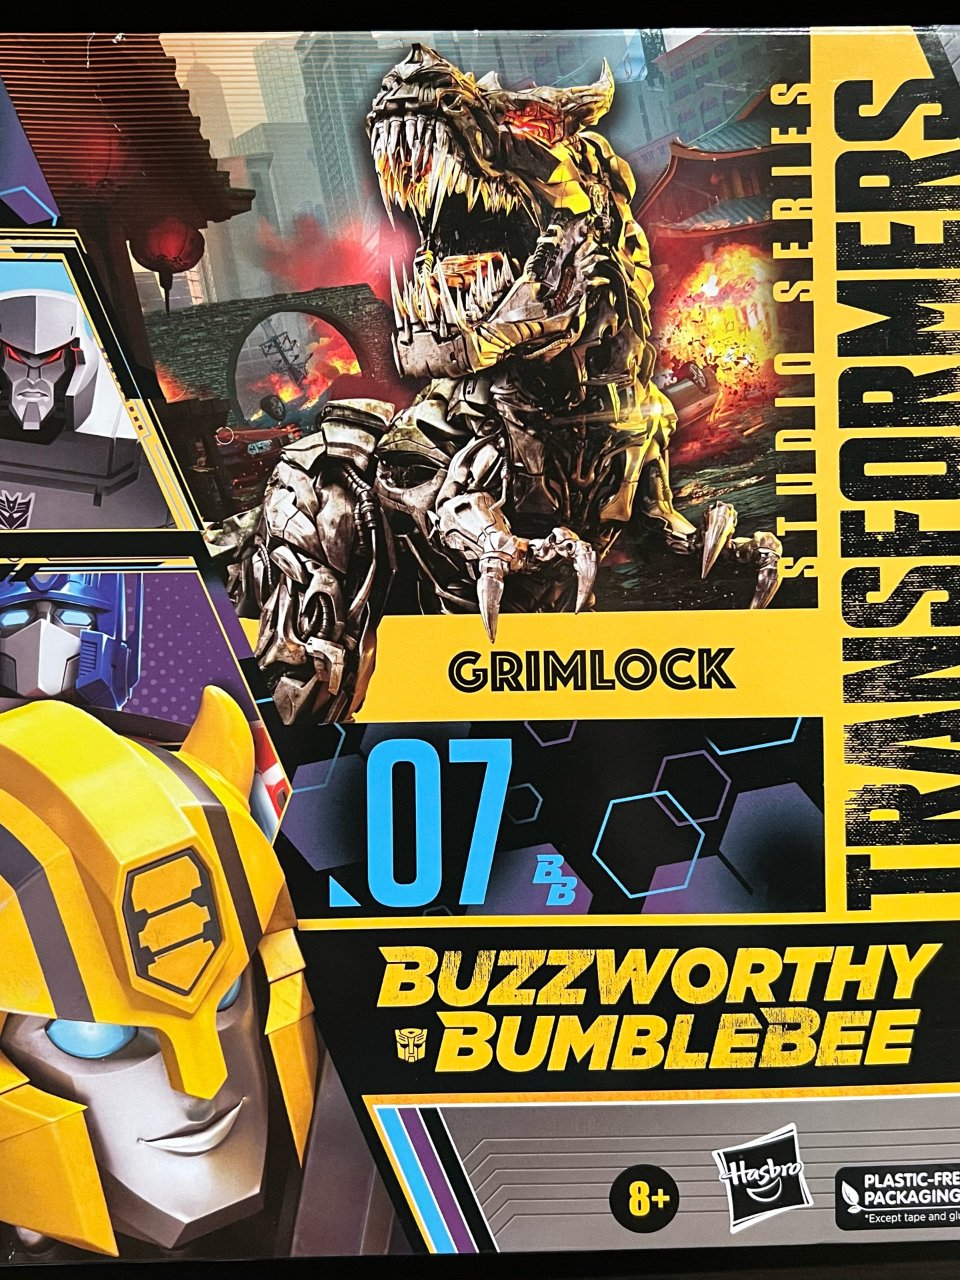 Transformers Studio Series 07BB Buzzworthy Bumblebee Grimlock Action Figure,F7118 : Toys & Games